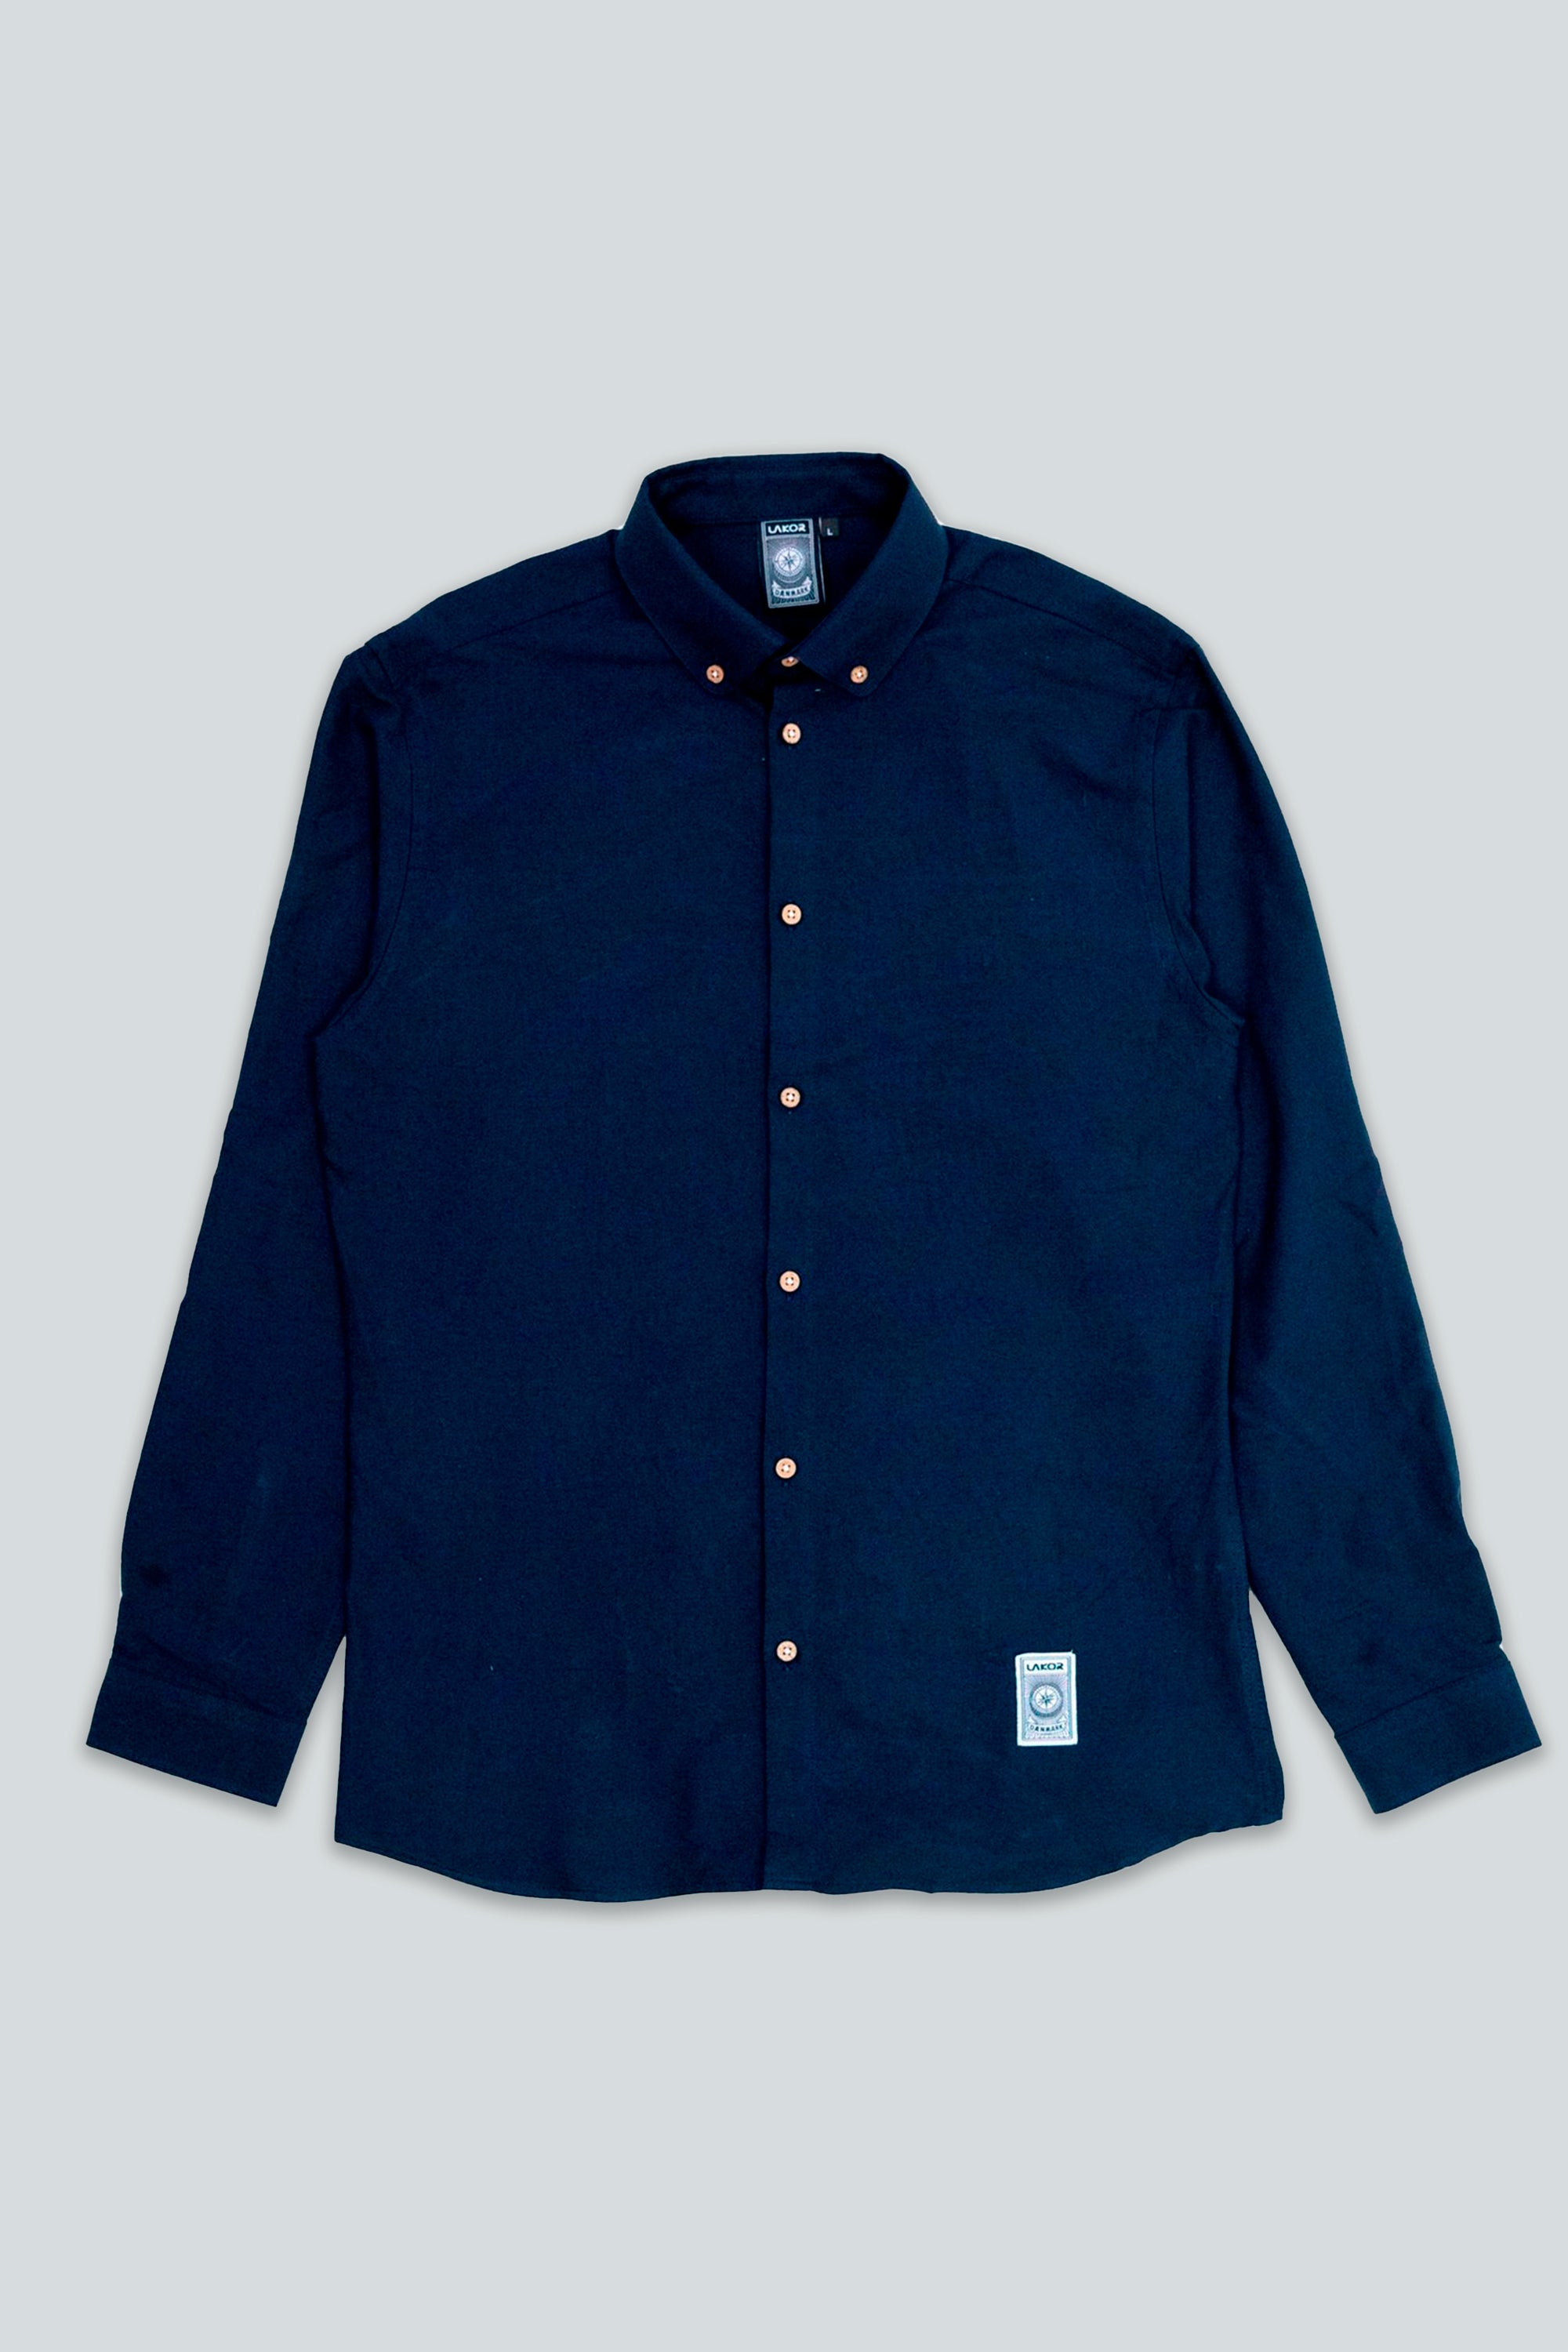 Oxford Shirt (Blueberry)